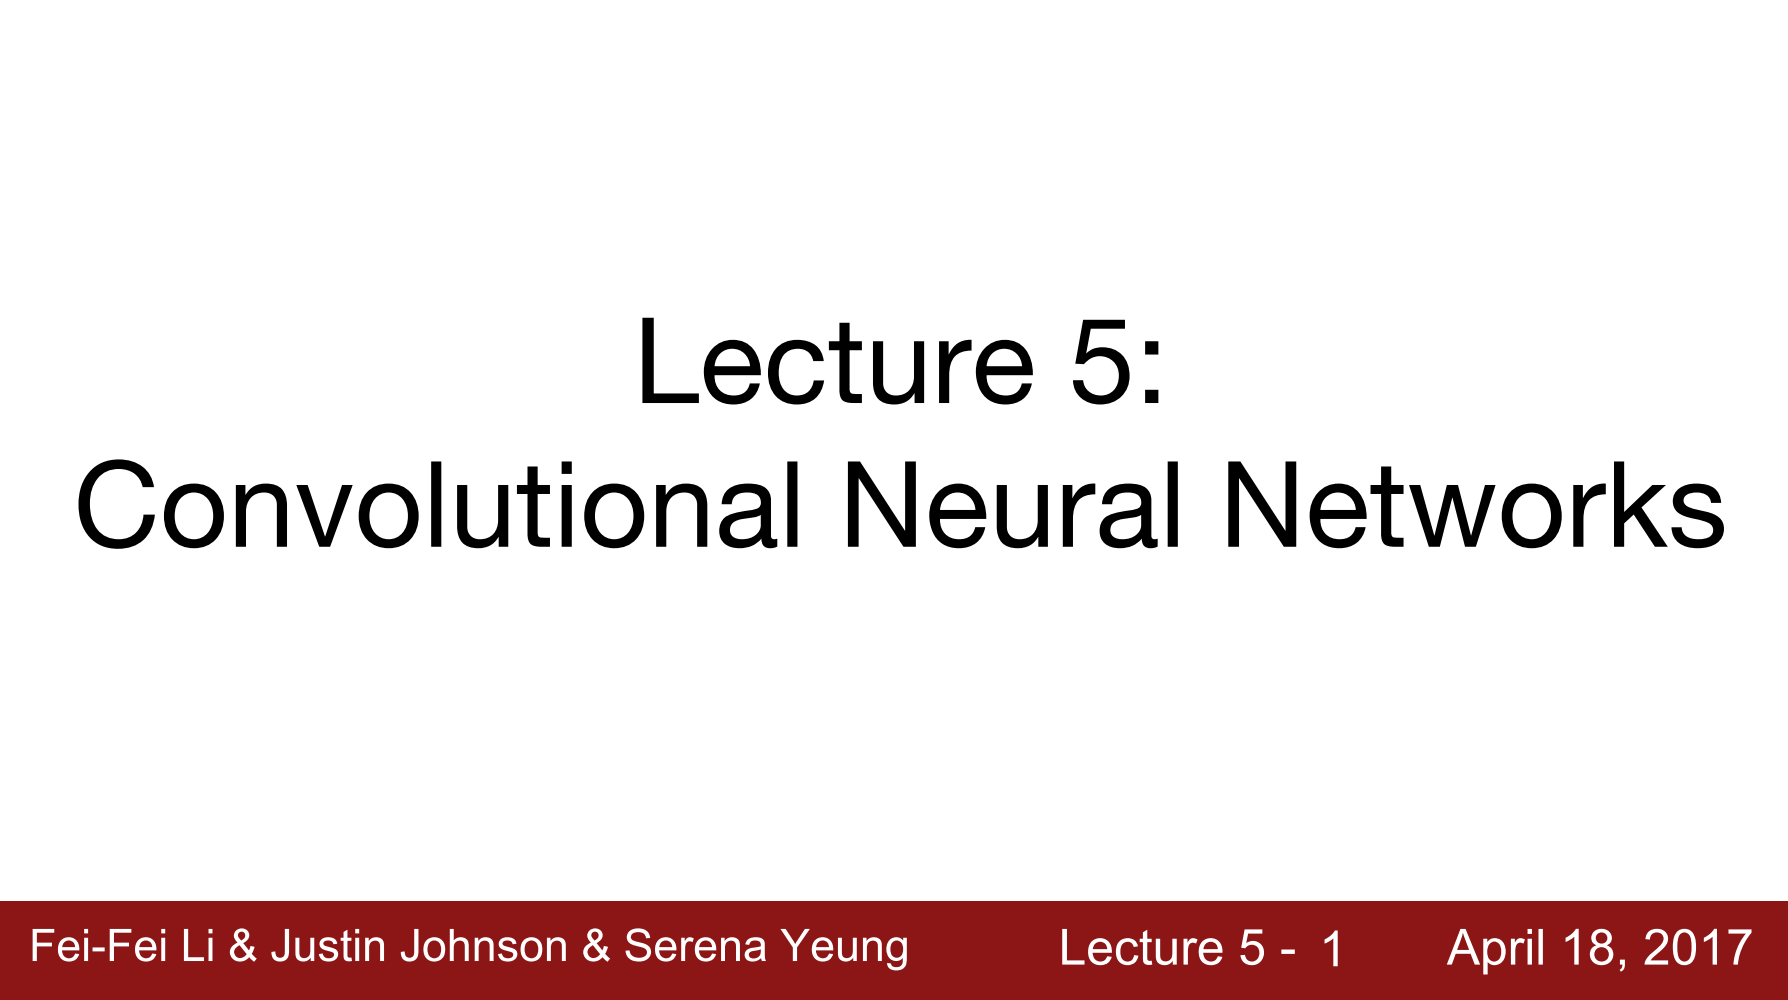 5. Convolutional Neural Networks